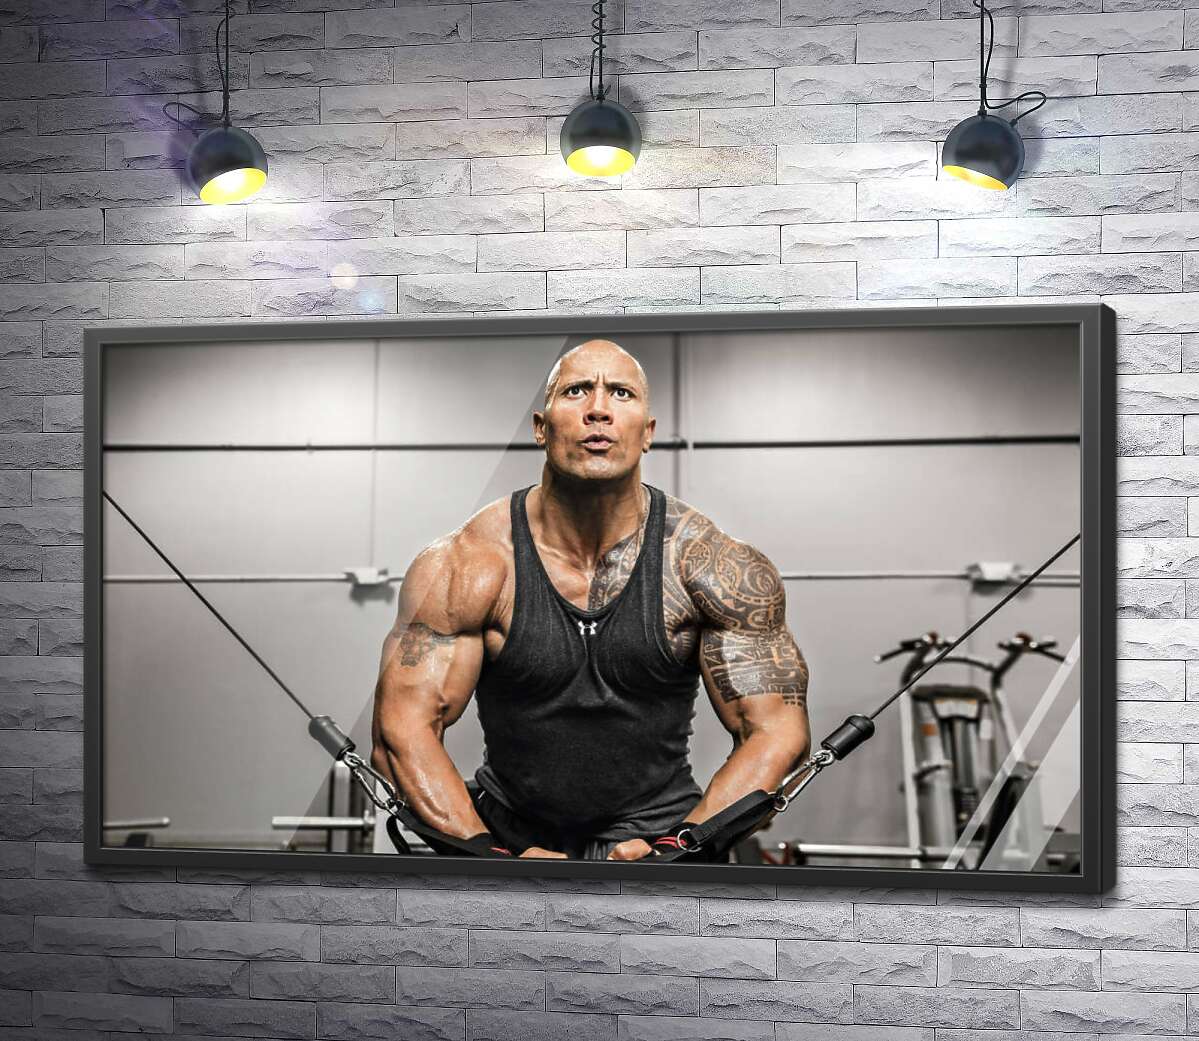 постер Дуэйн Джонсон (Dwayne Johnson) тренирует мышцы рук в спортзале